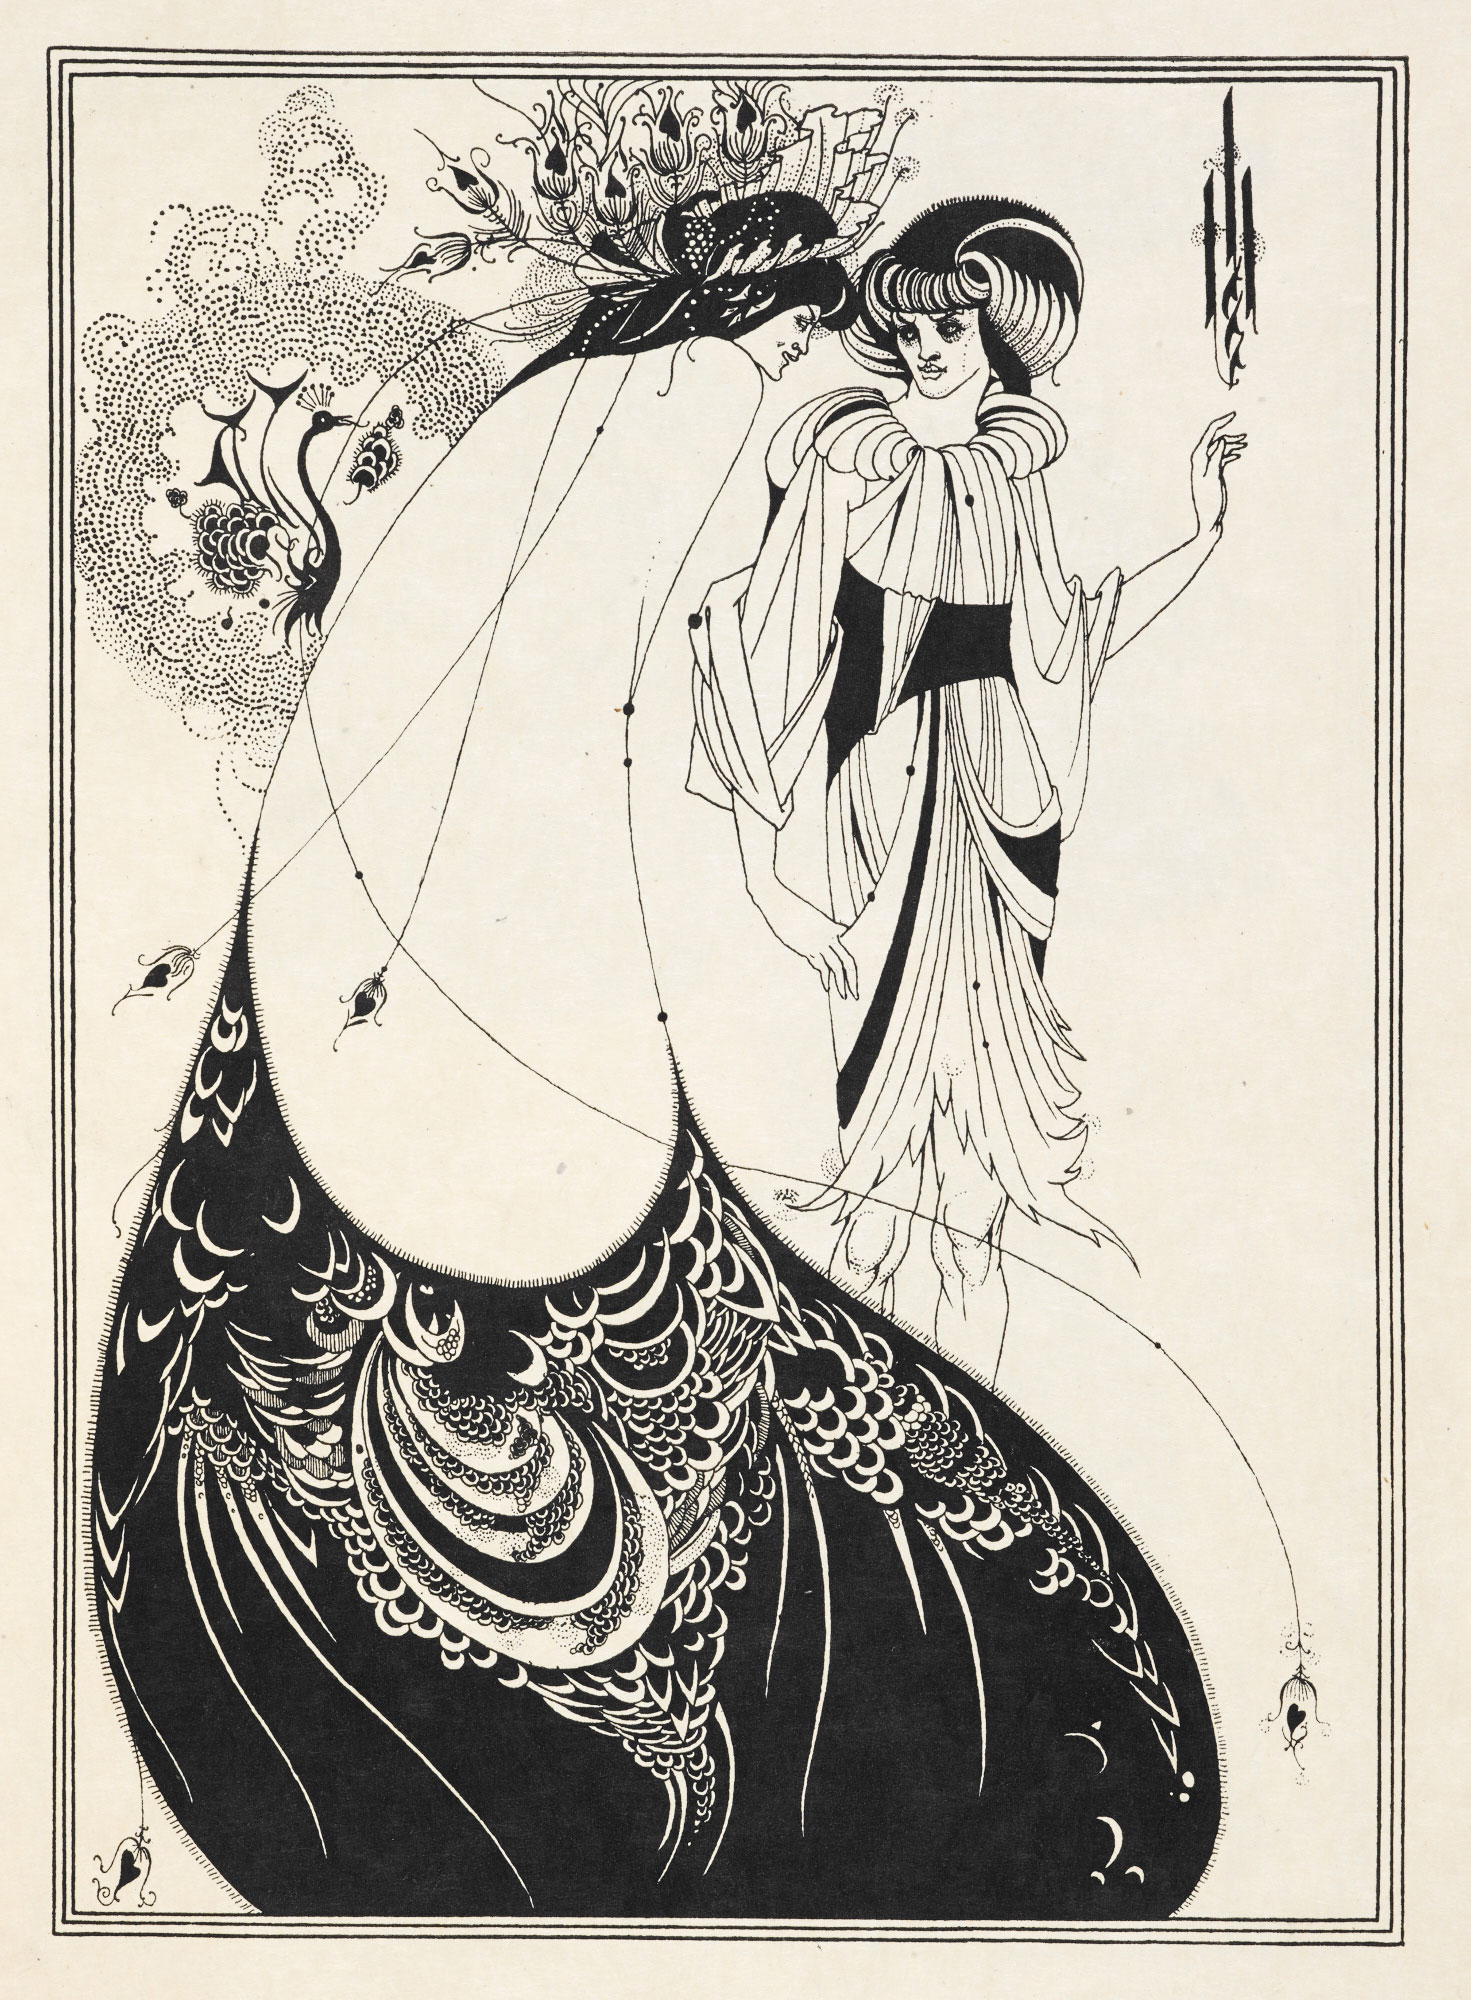 Oscar Wilde's Play Salome Illustrated by Aubrey Beardsley in a Striking